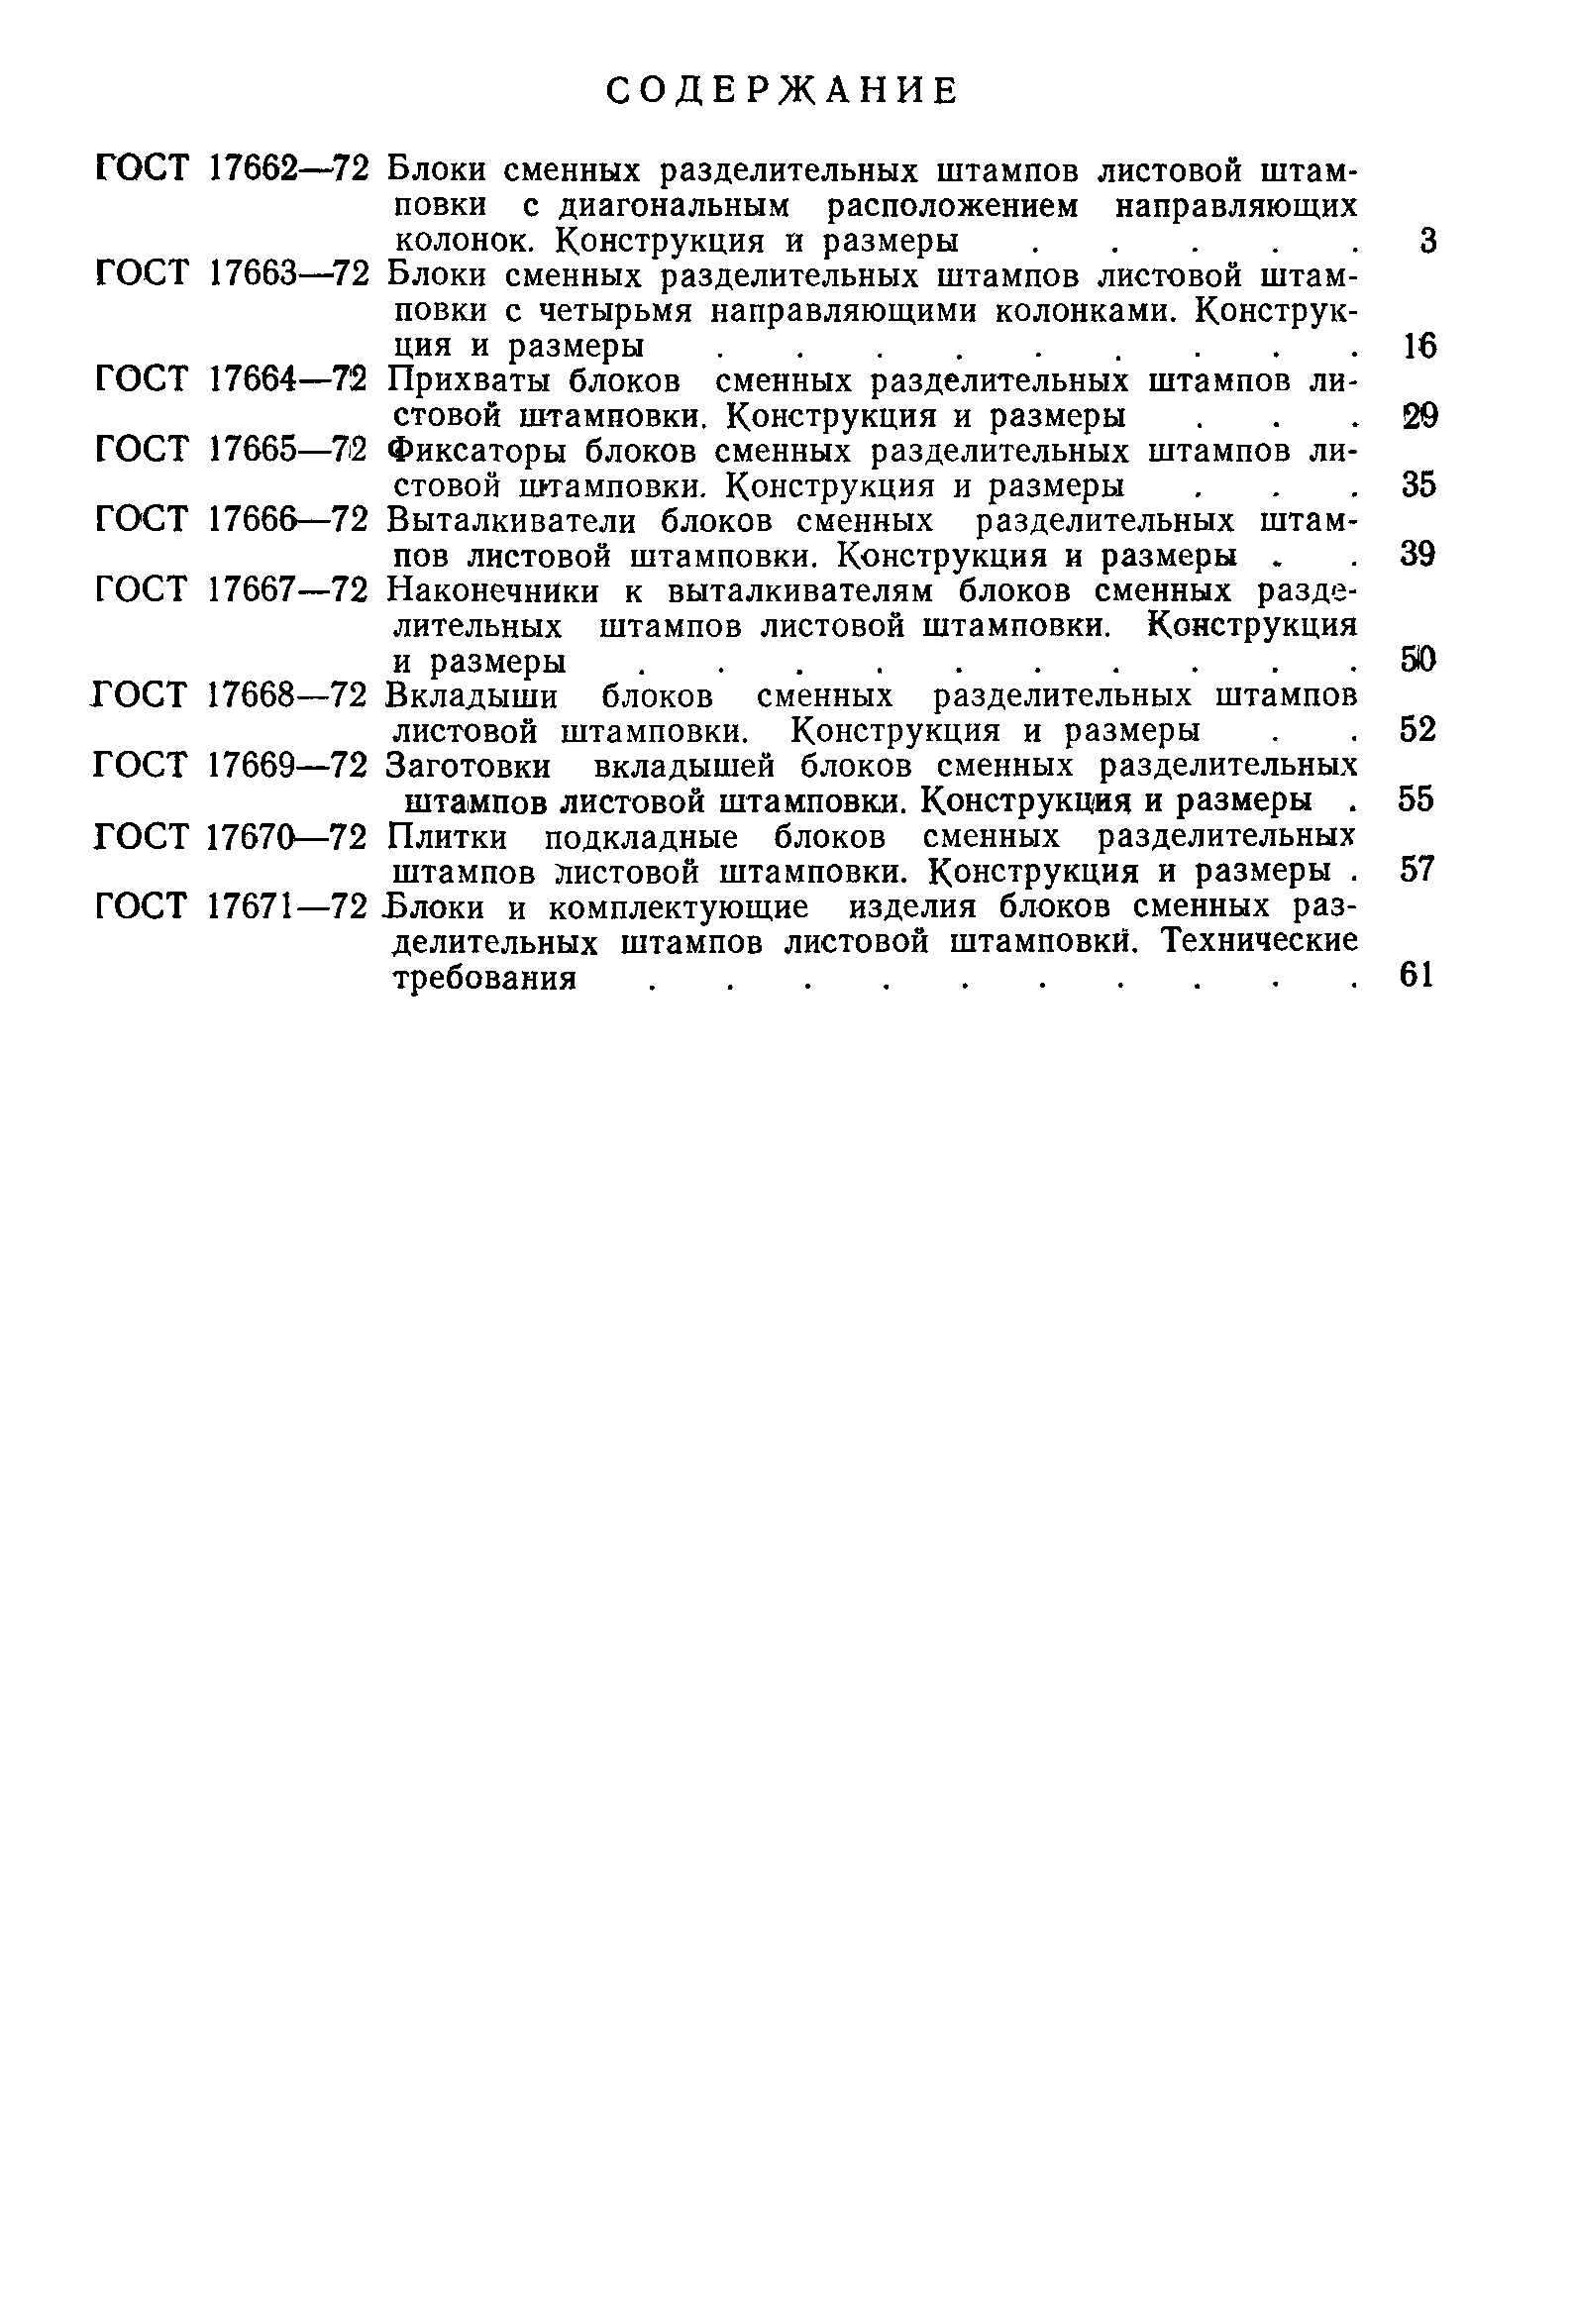 ГОСТ 17671-72